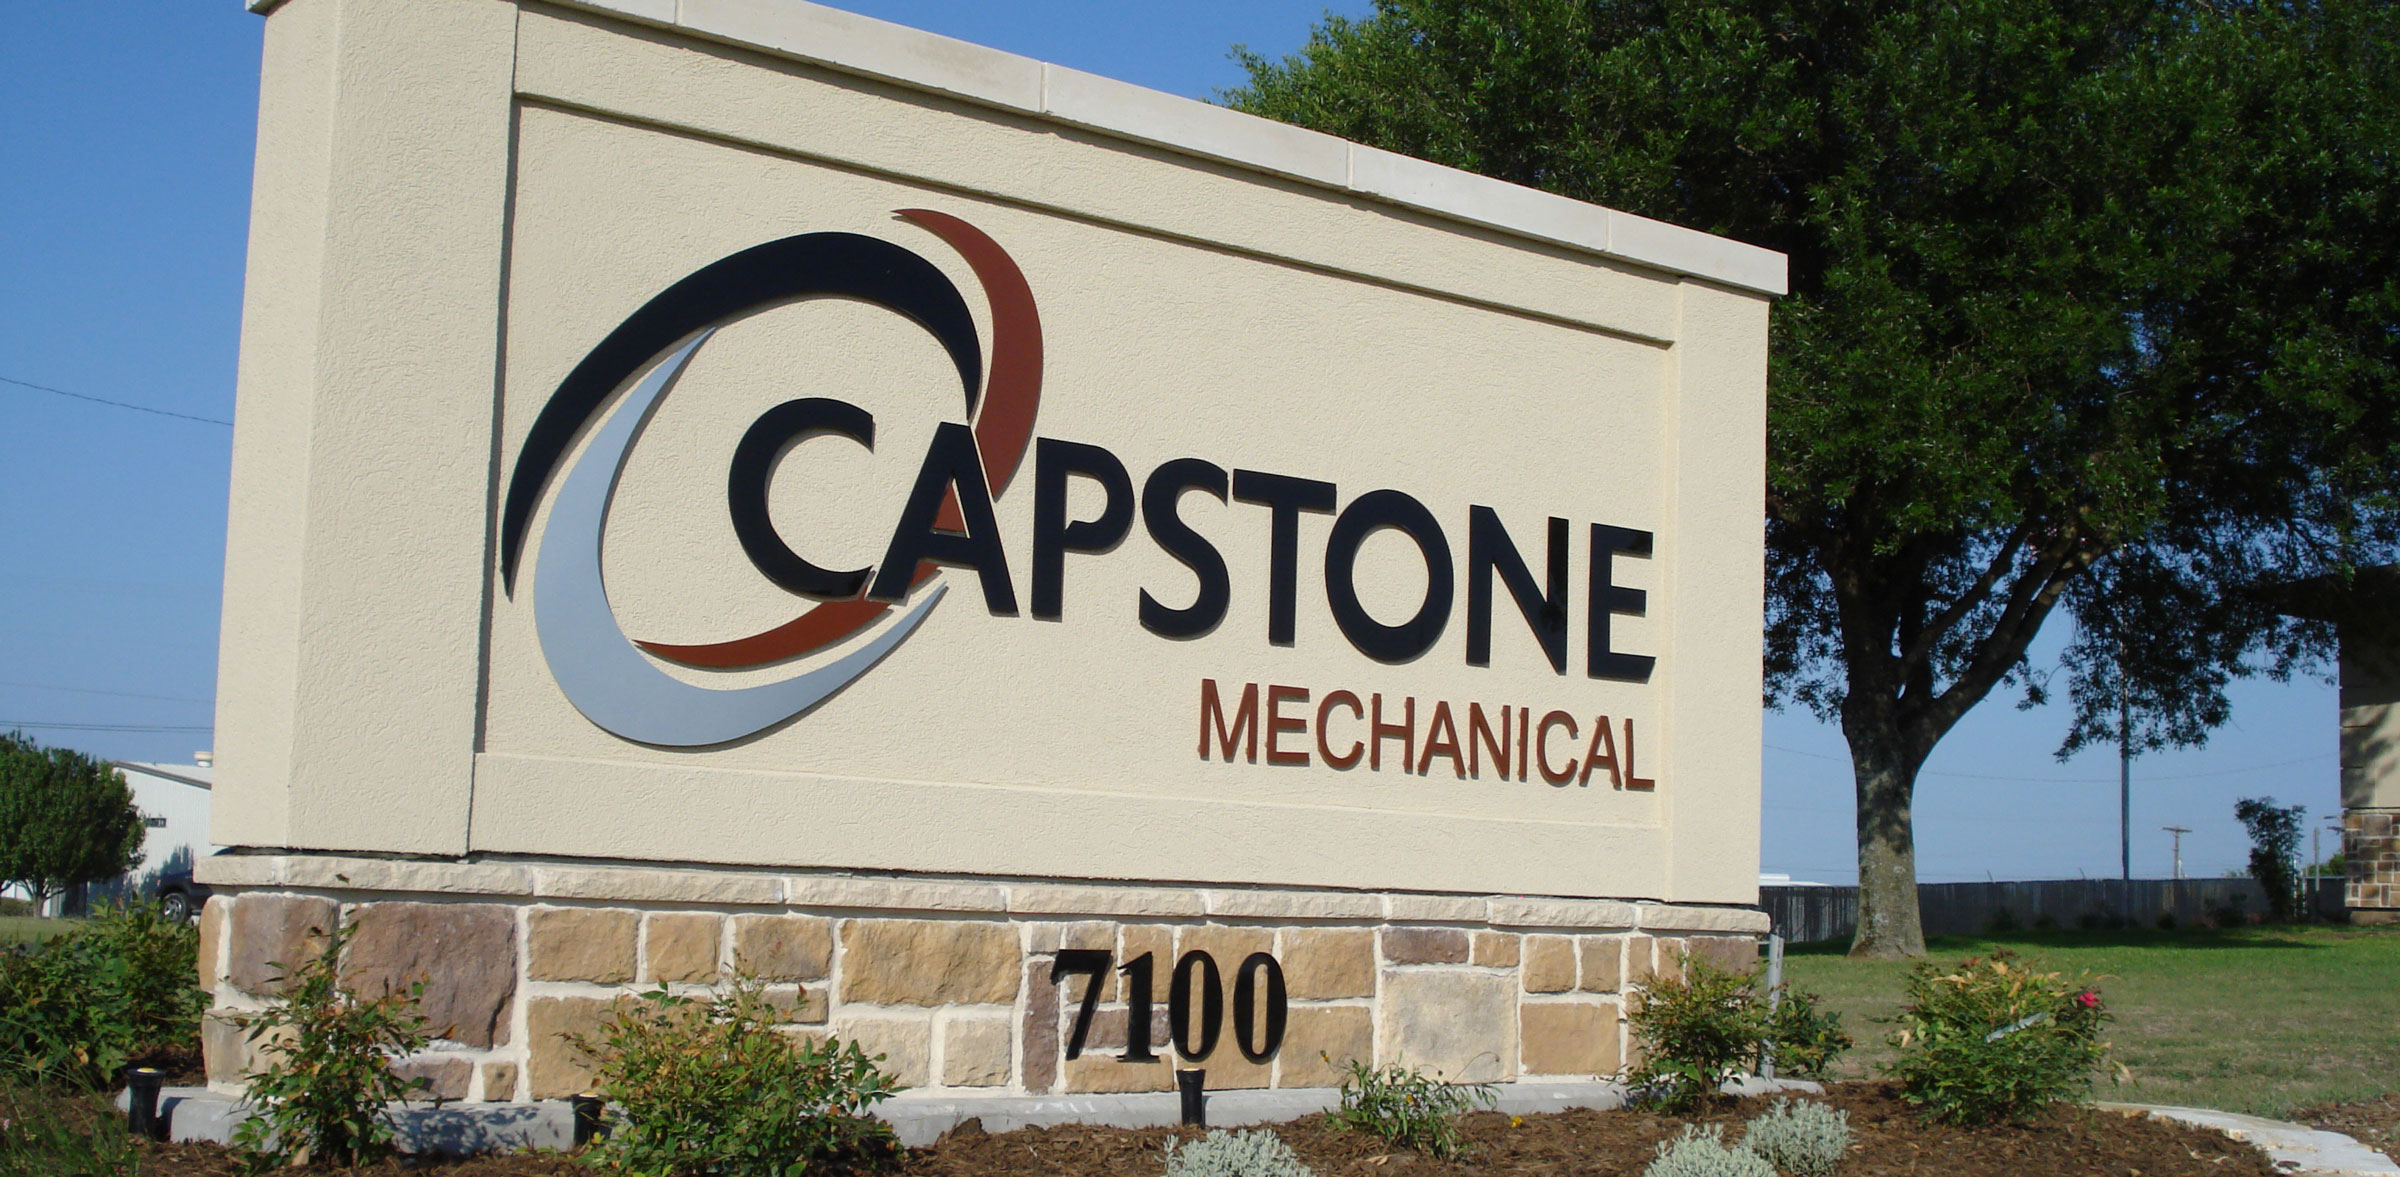 Capstone capstone